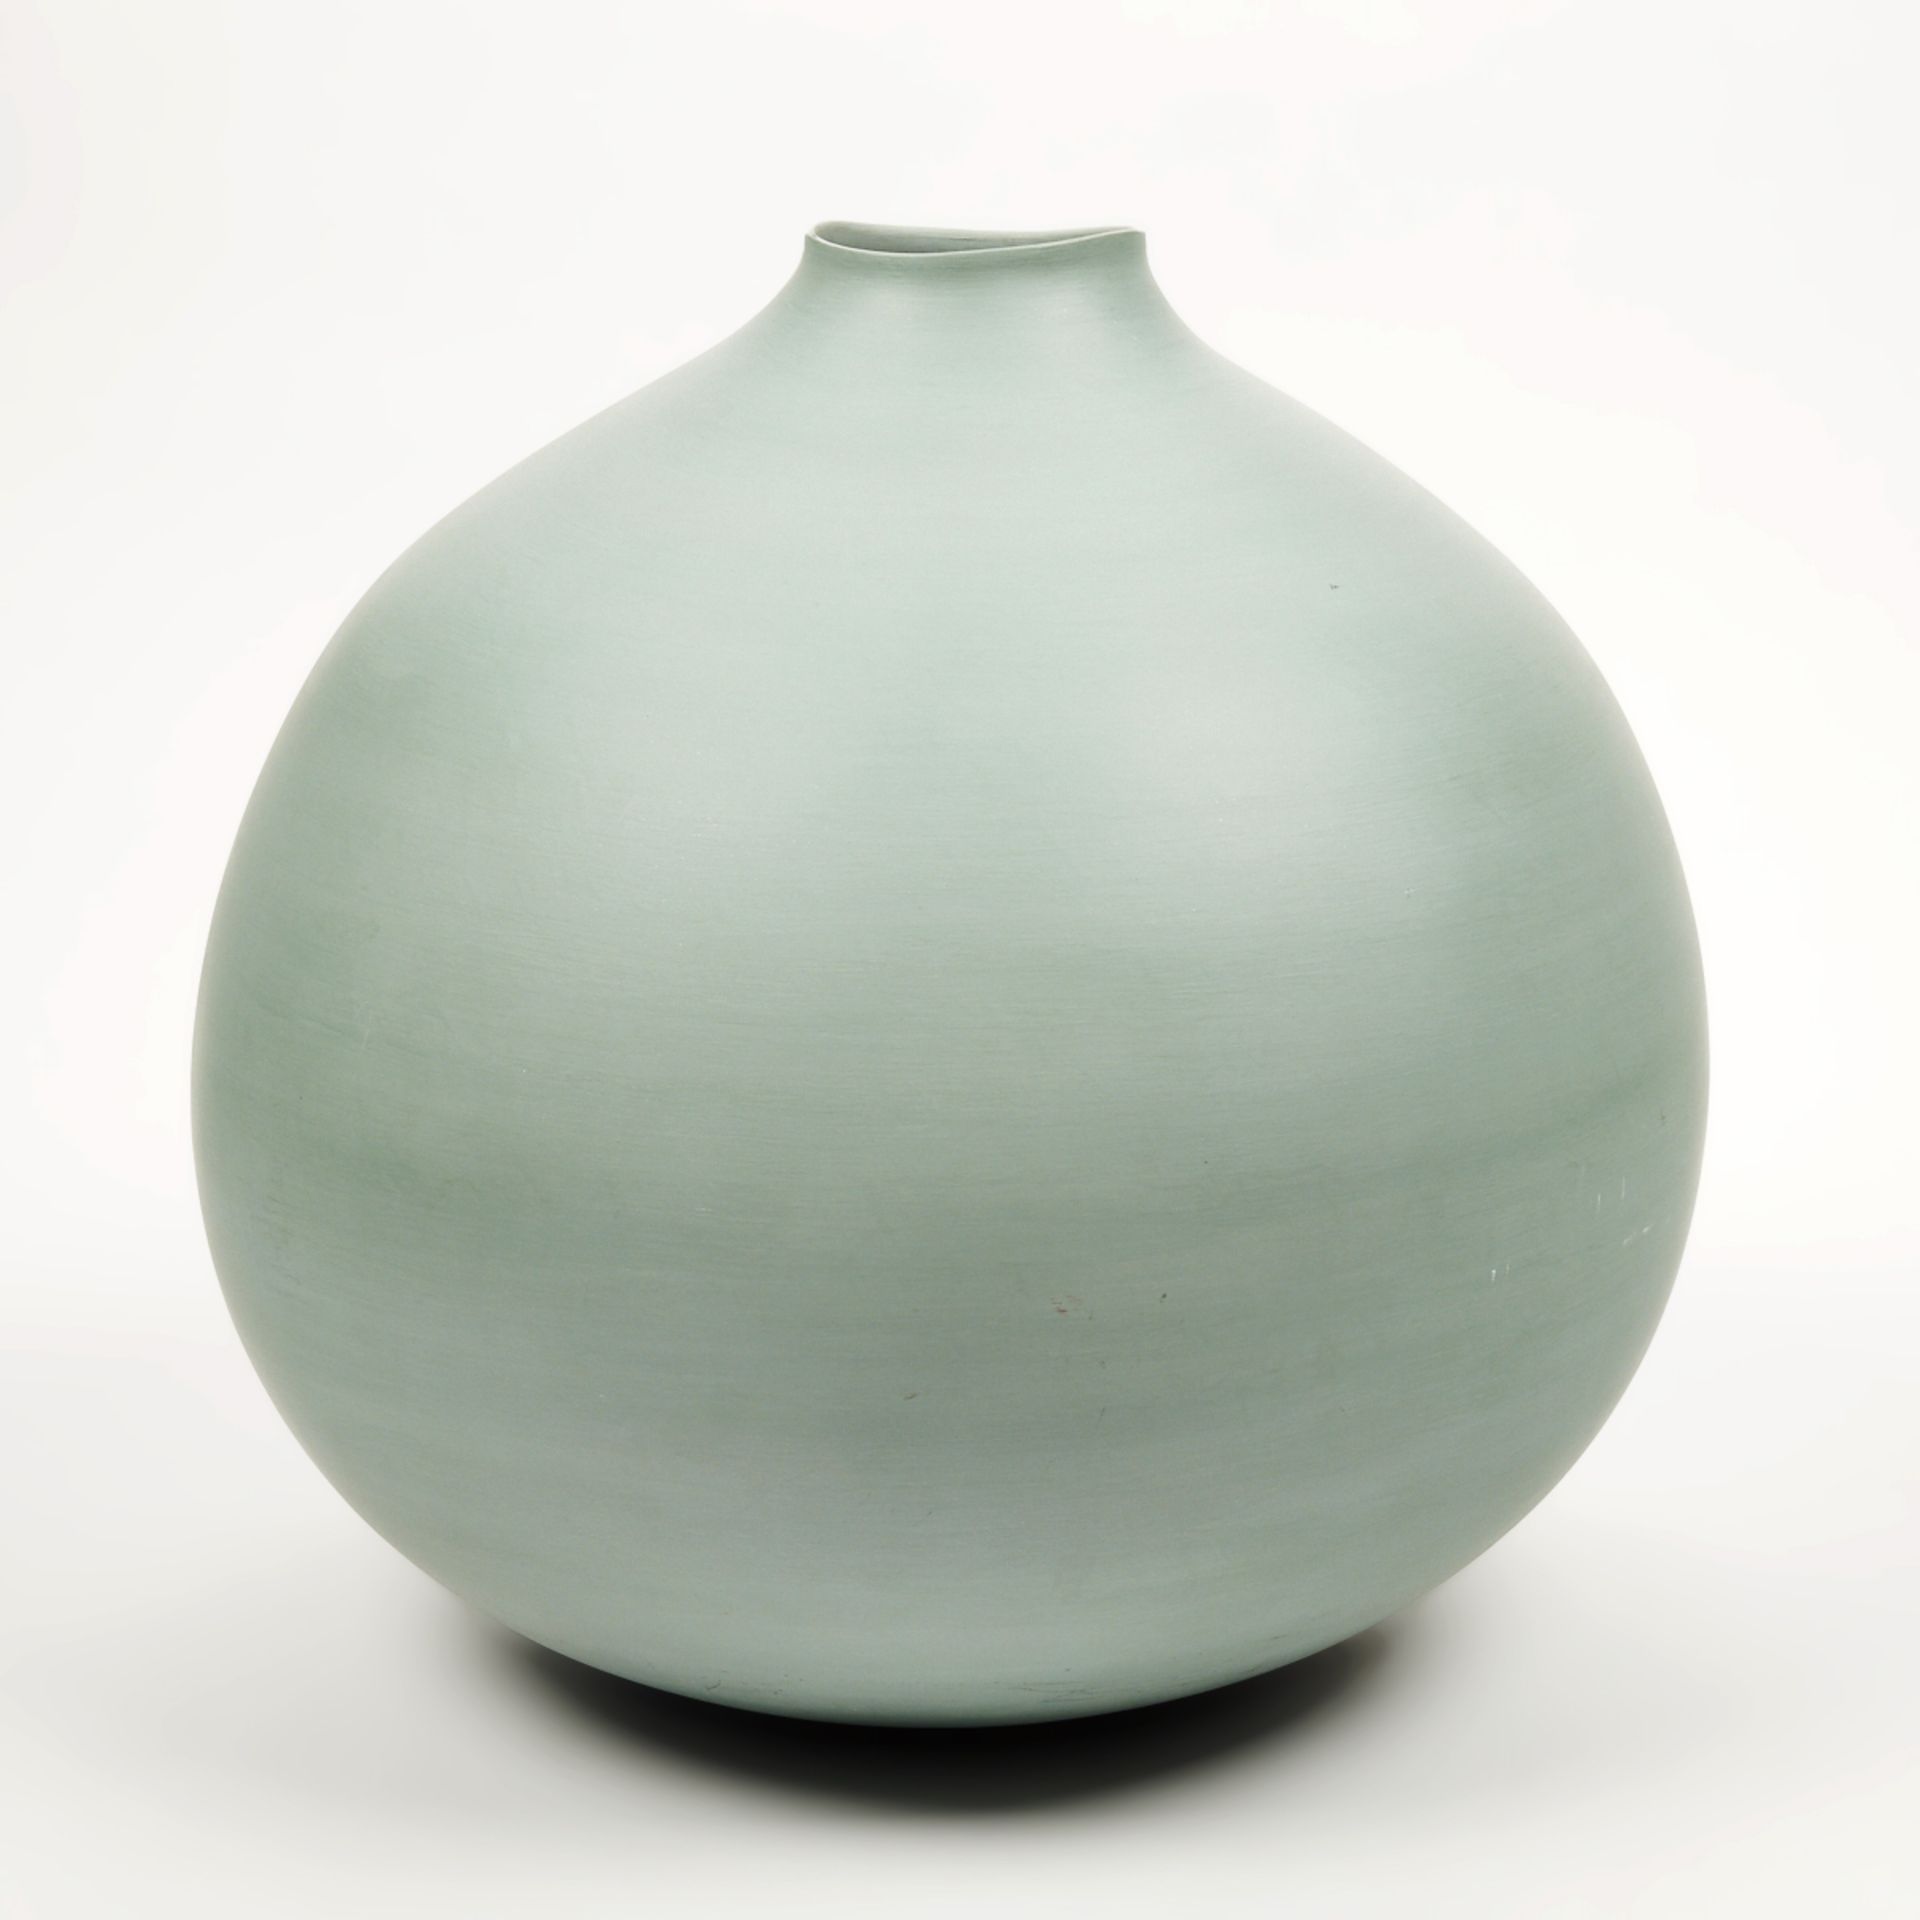 Jacquie Stevens Winnebago Large Ceramic Vase - Image 3 of 8